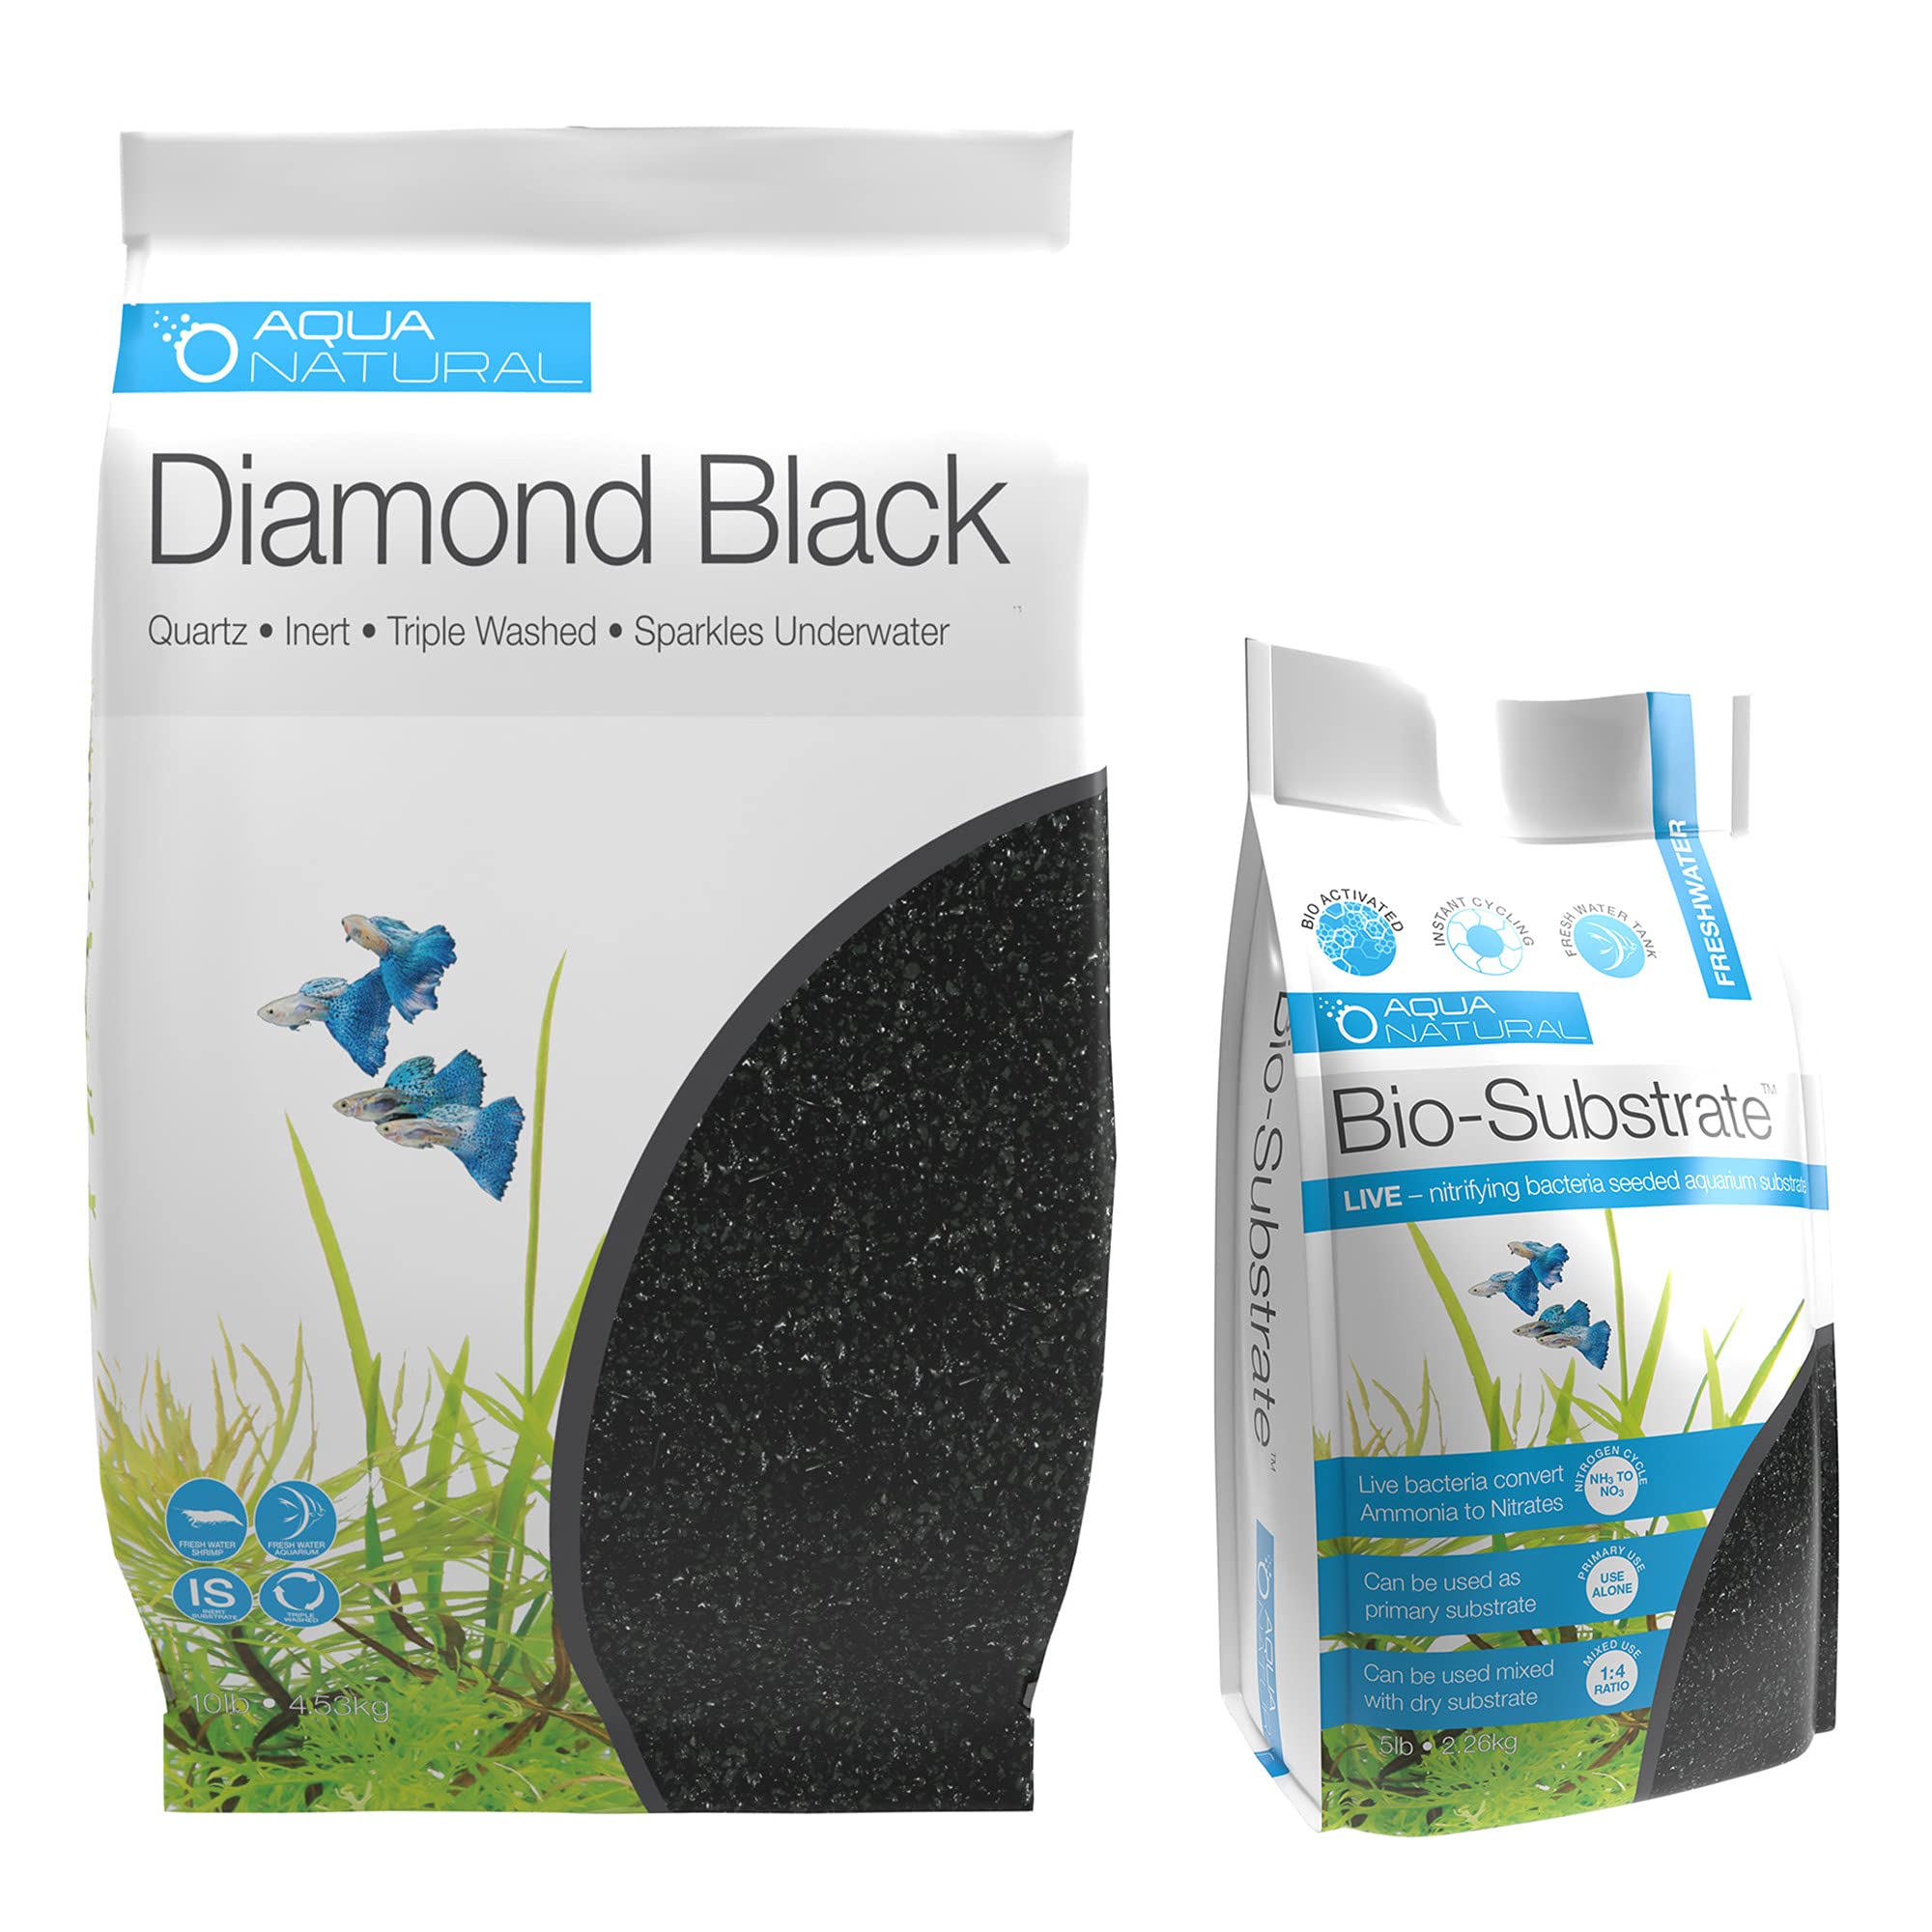 Aqua Natural introduces BIOKIT004: Diamond Black Substrate Kit for Aquariums.